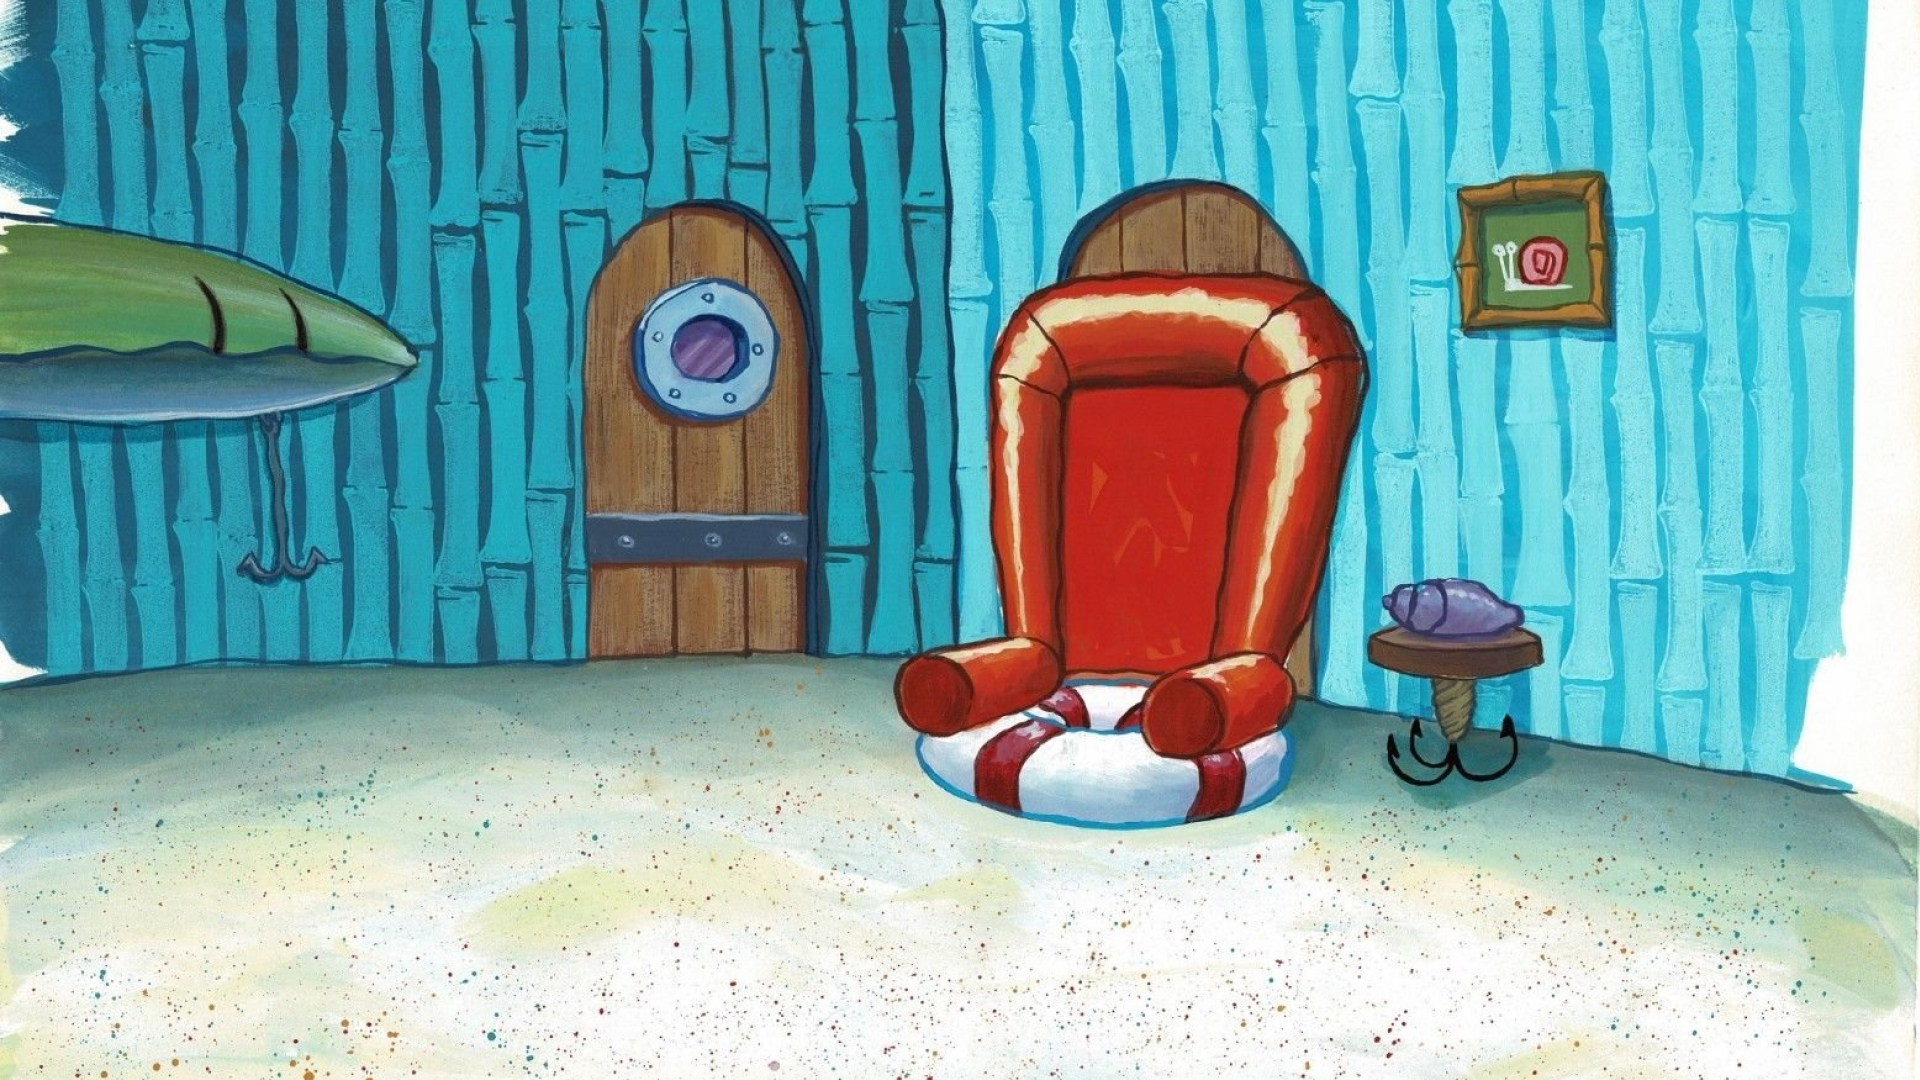 SpongeBob's Big Red Chair in House